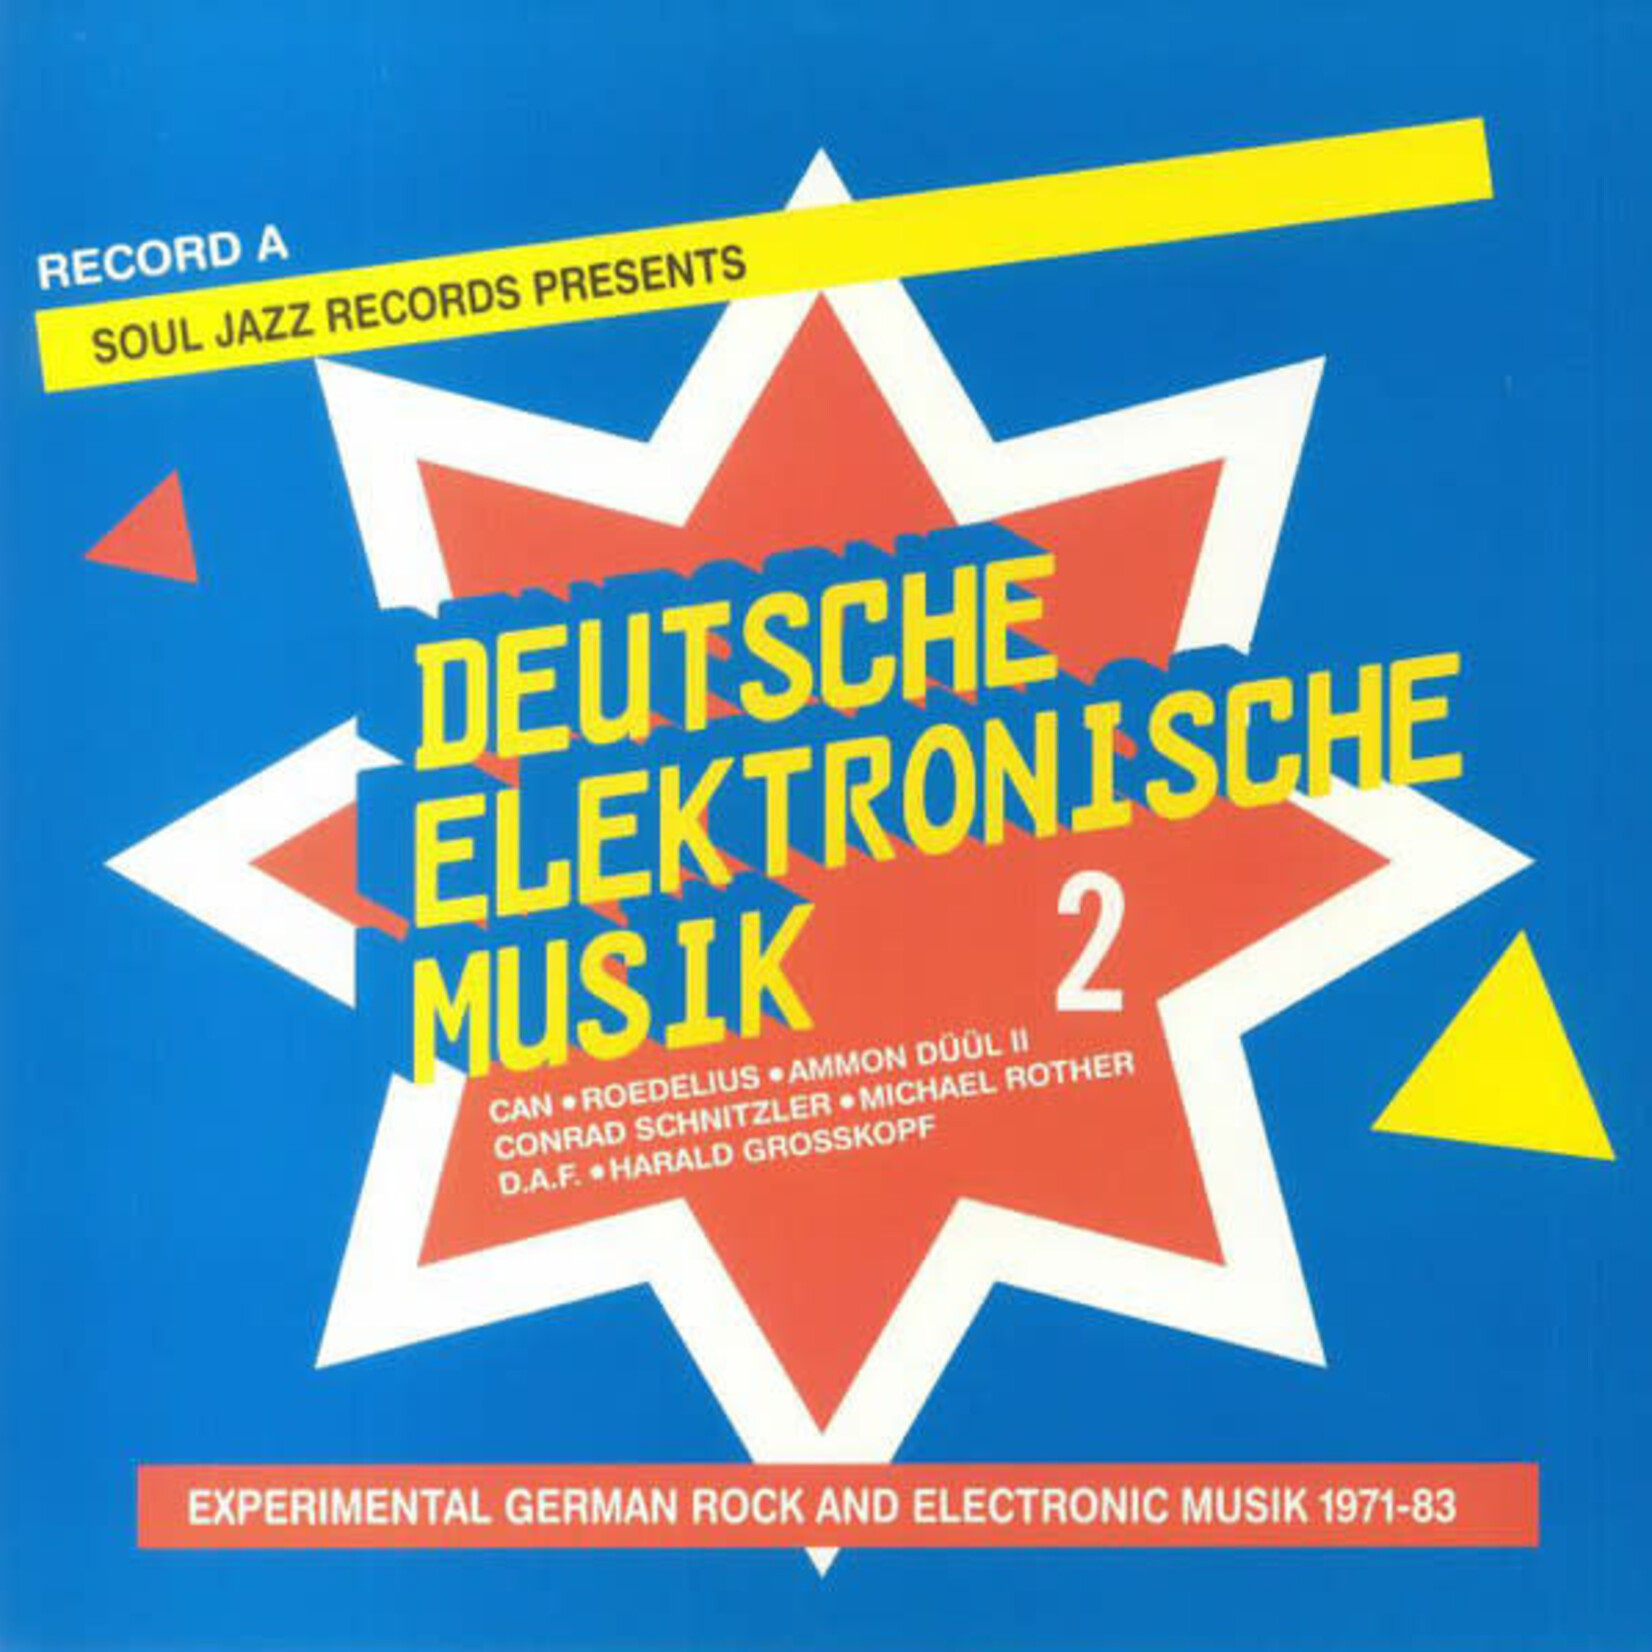 V/A – Deutsche Elektronische Musik 2 (Experimental German Rock And Electronic Musik 1971-83) (Record A)